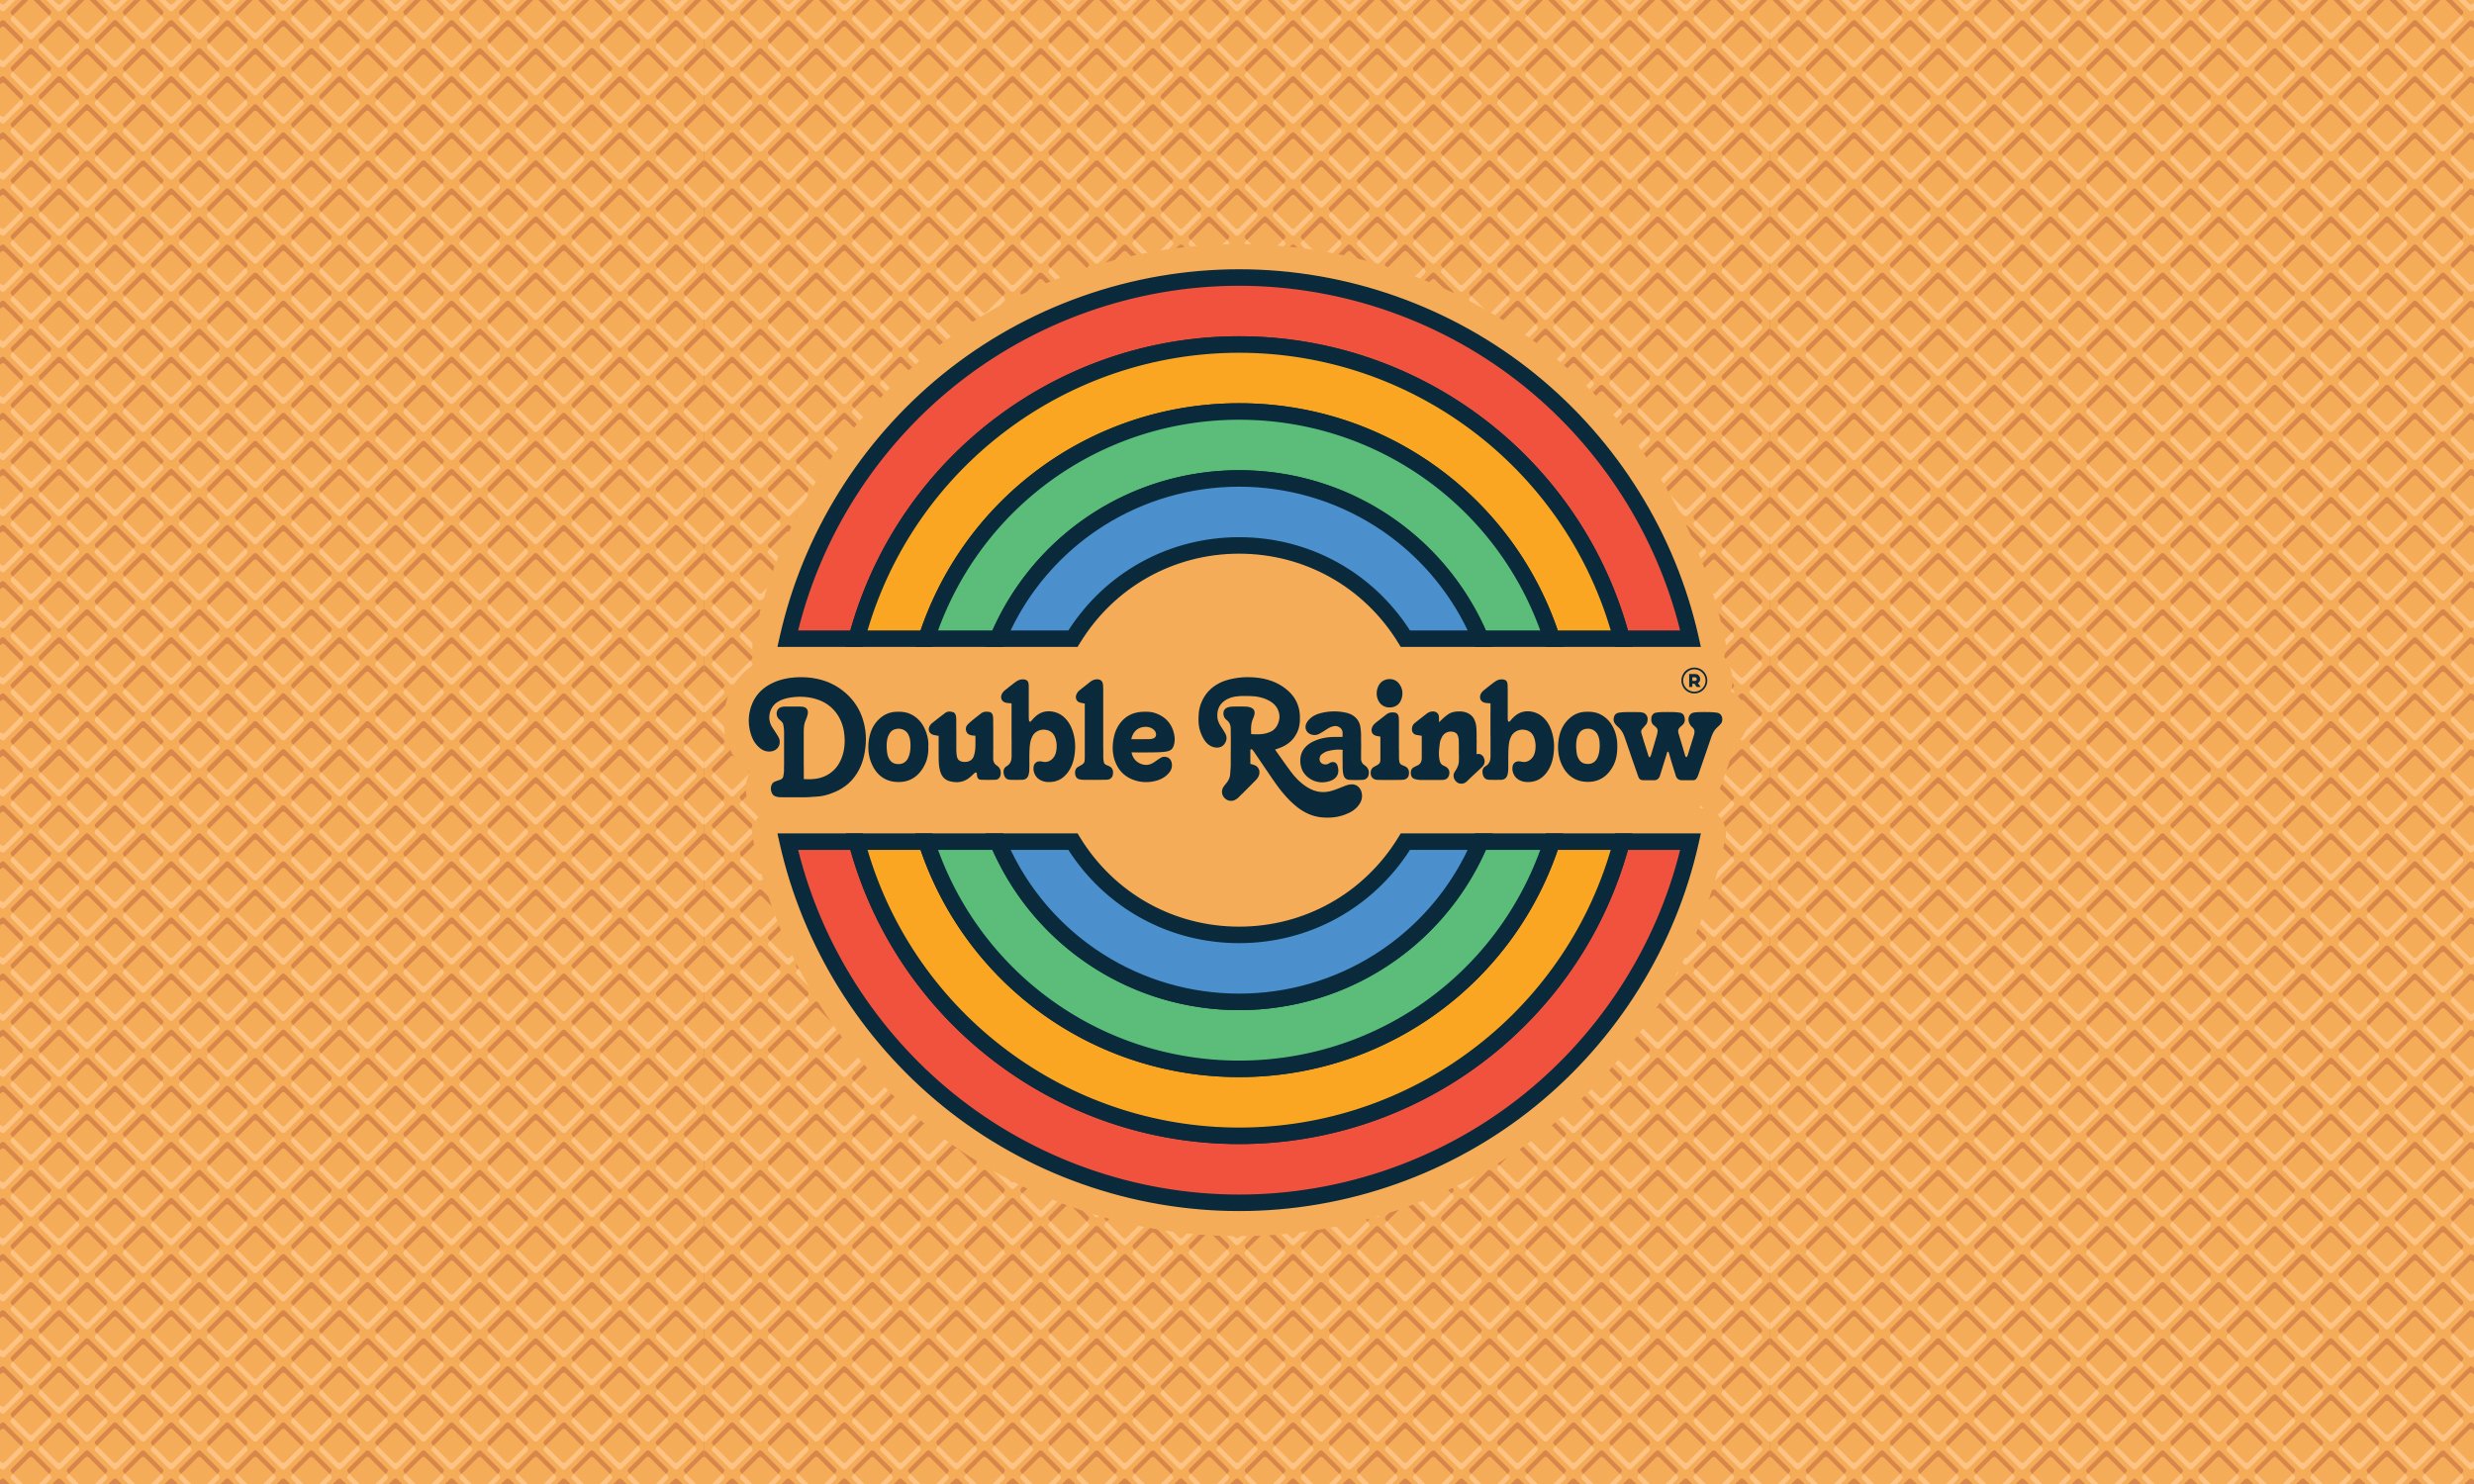 DoubleRainbow_Logo_WaffleCone.jpg